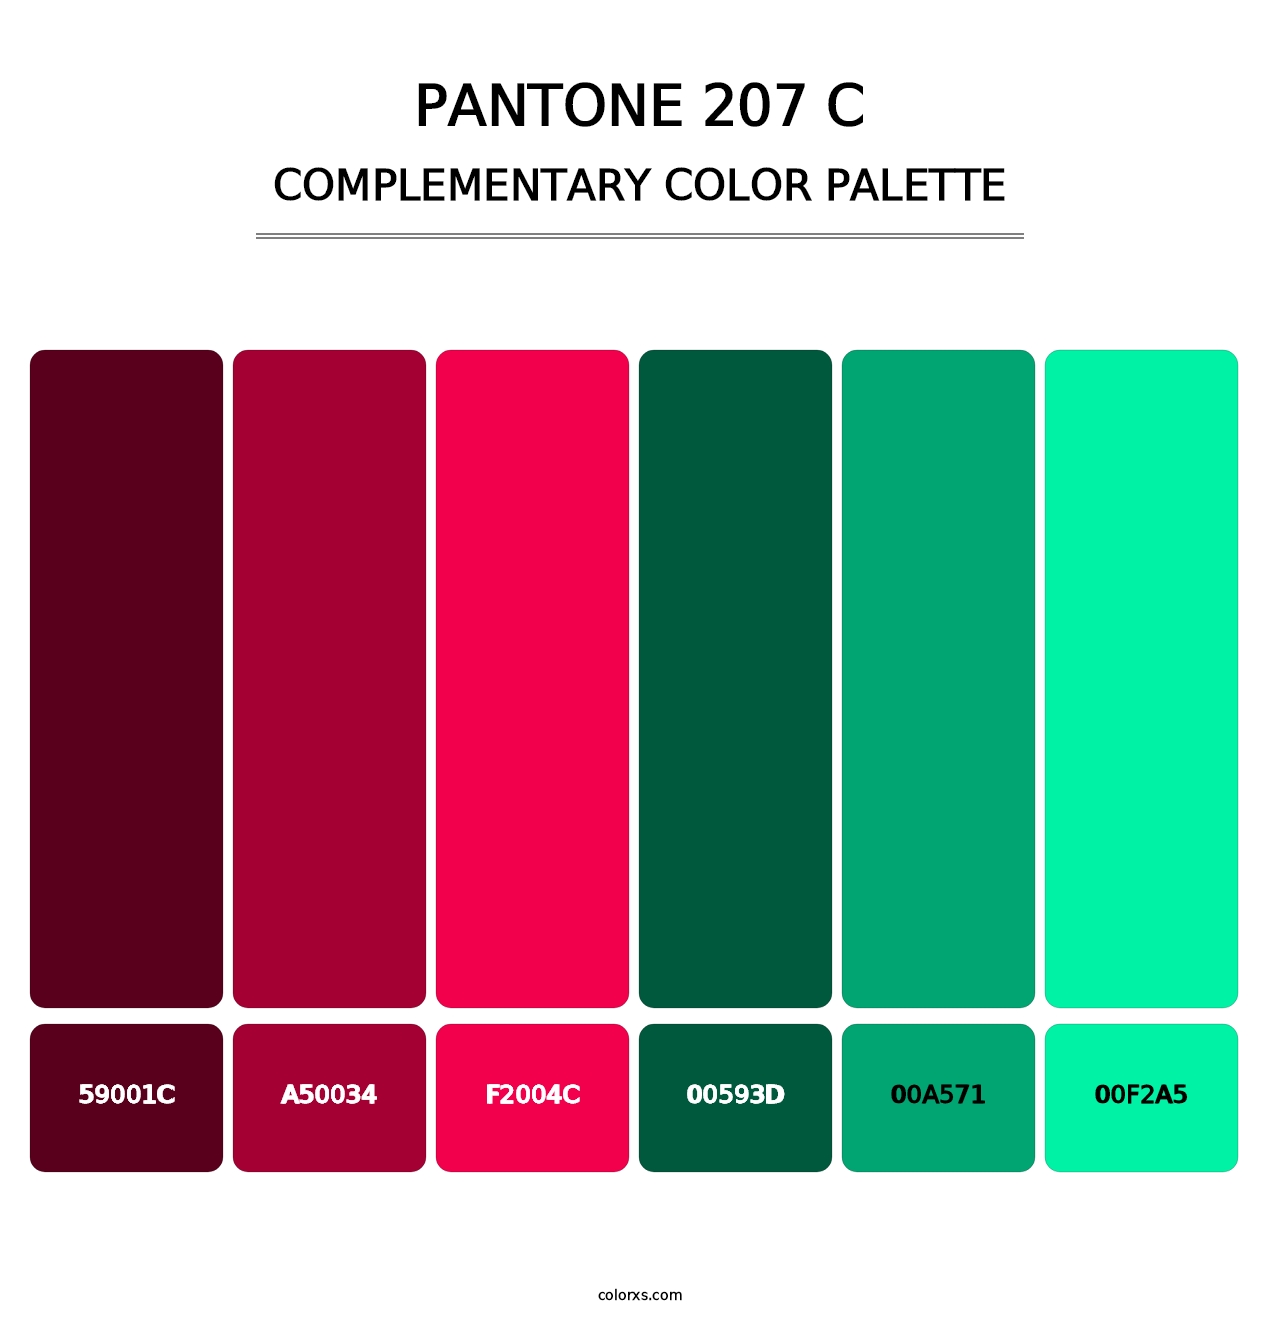 PANTONE 207 C - Complementary Color Palette